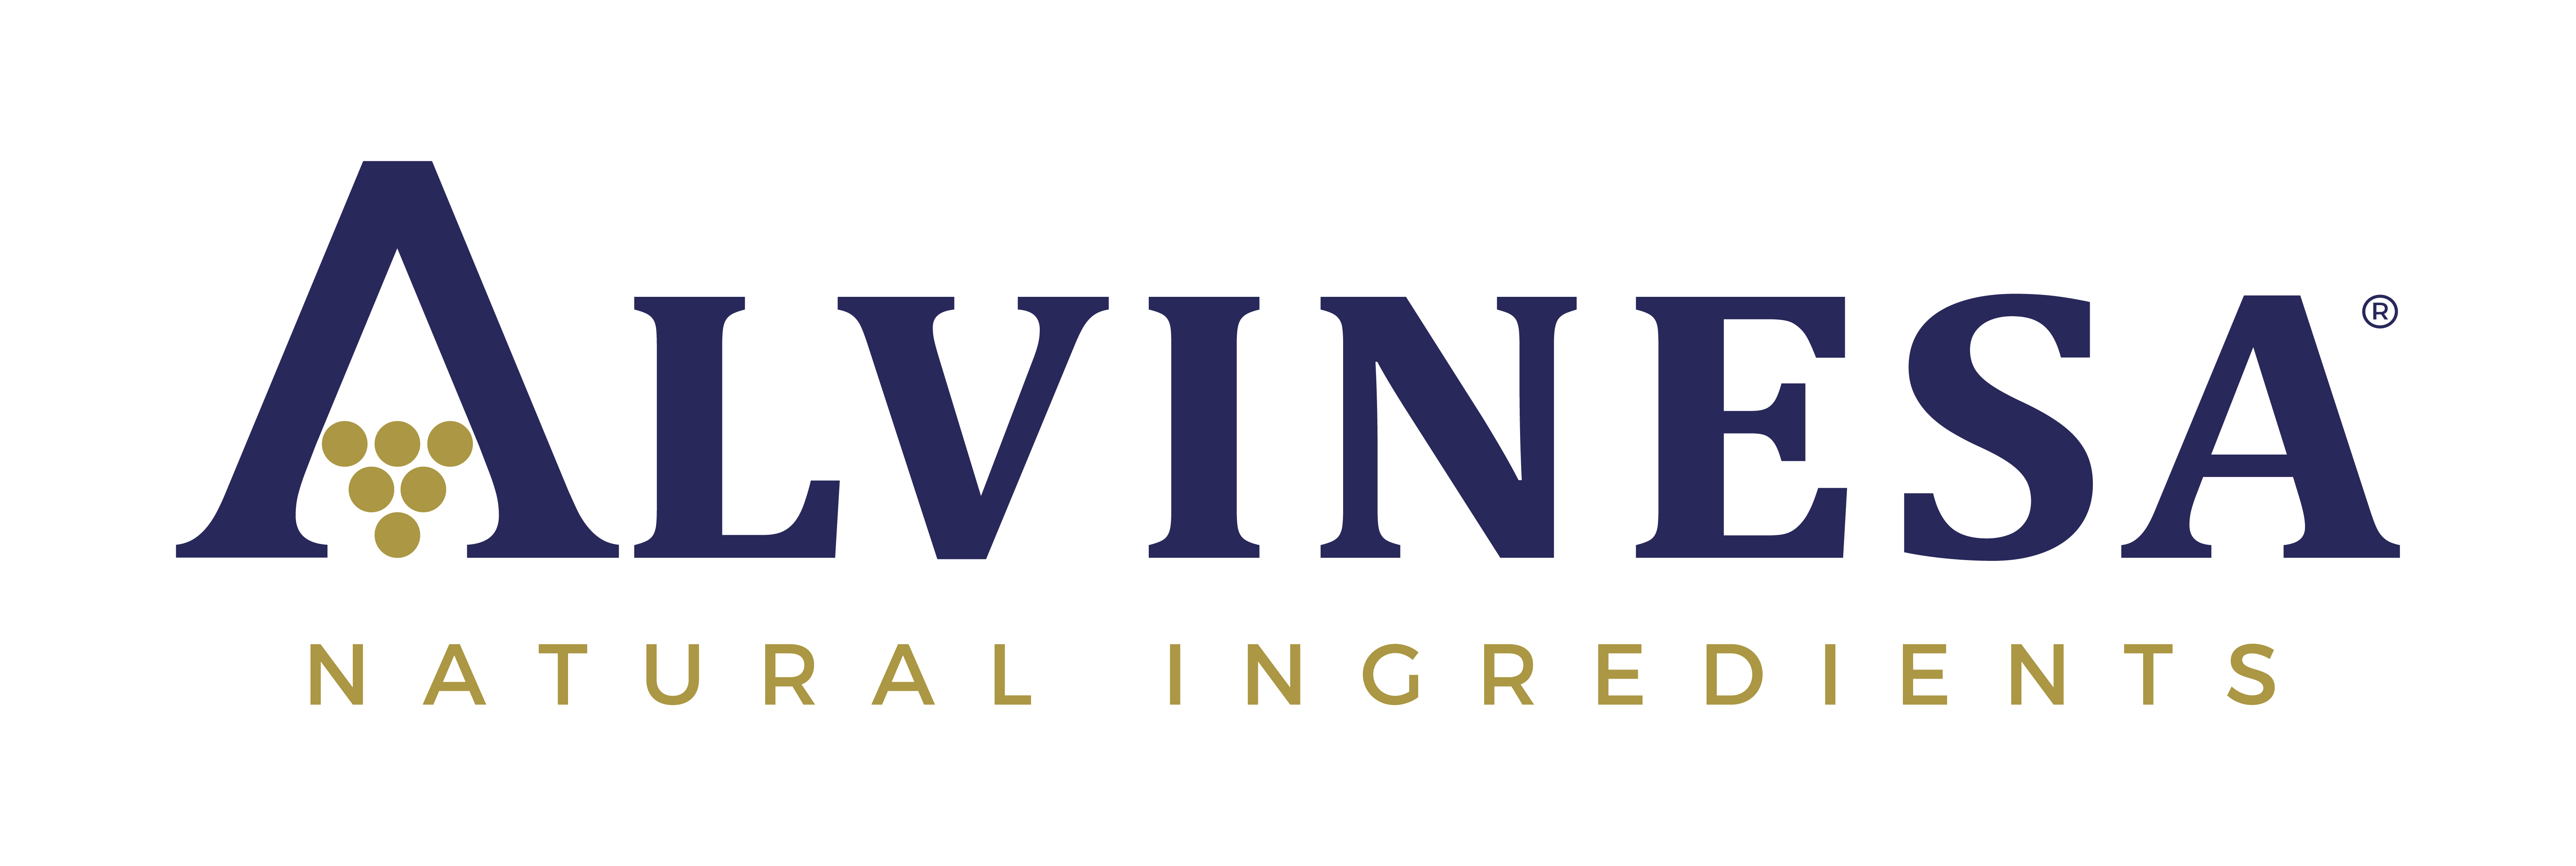 Alvinesa Natural Ingredients - Logo.jpg